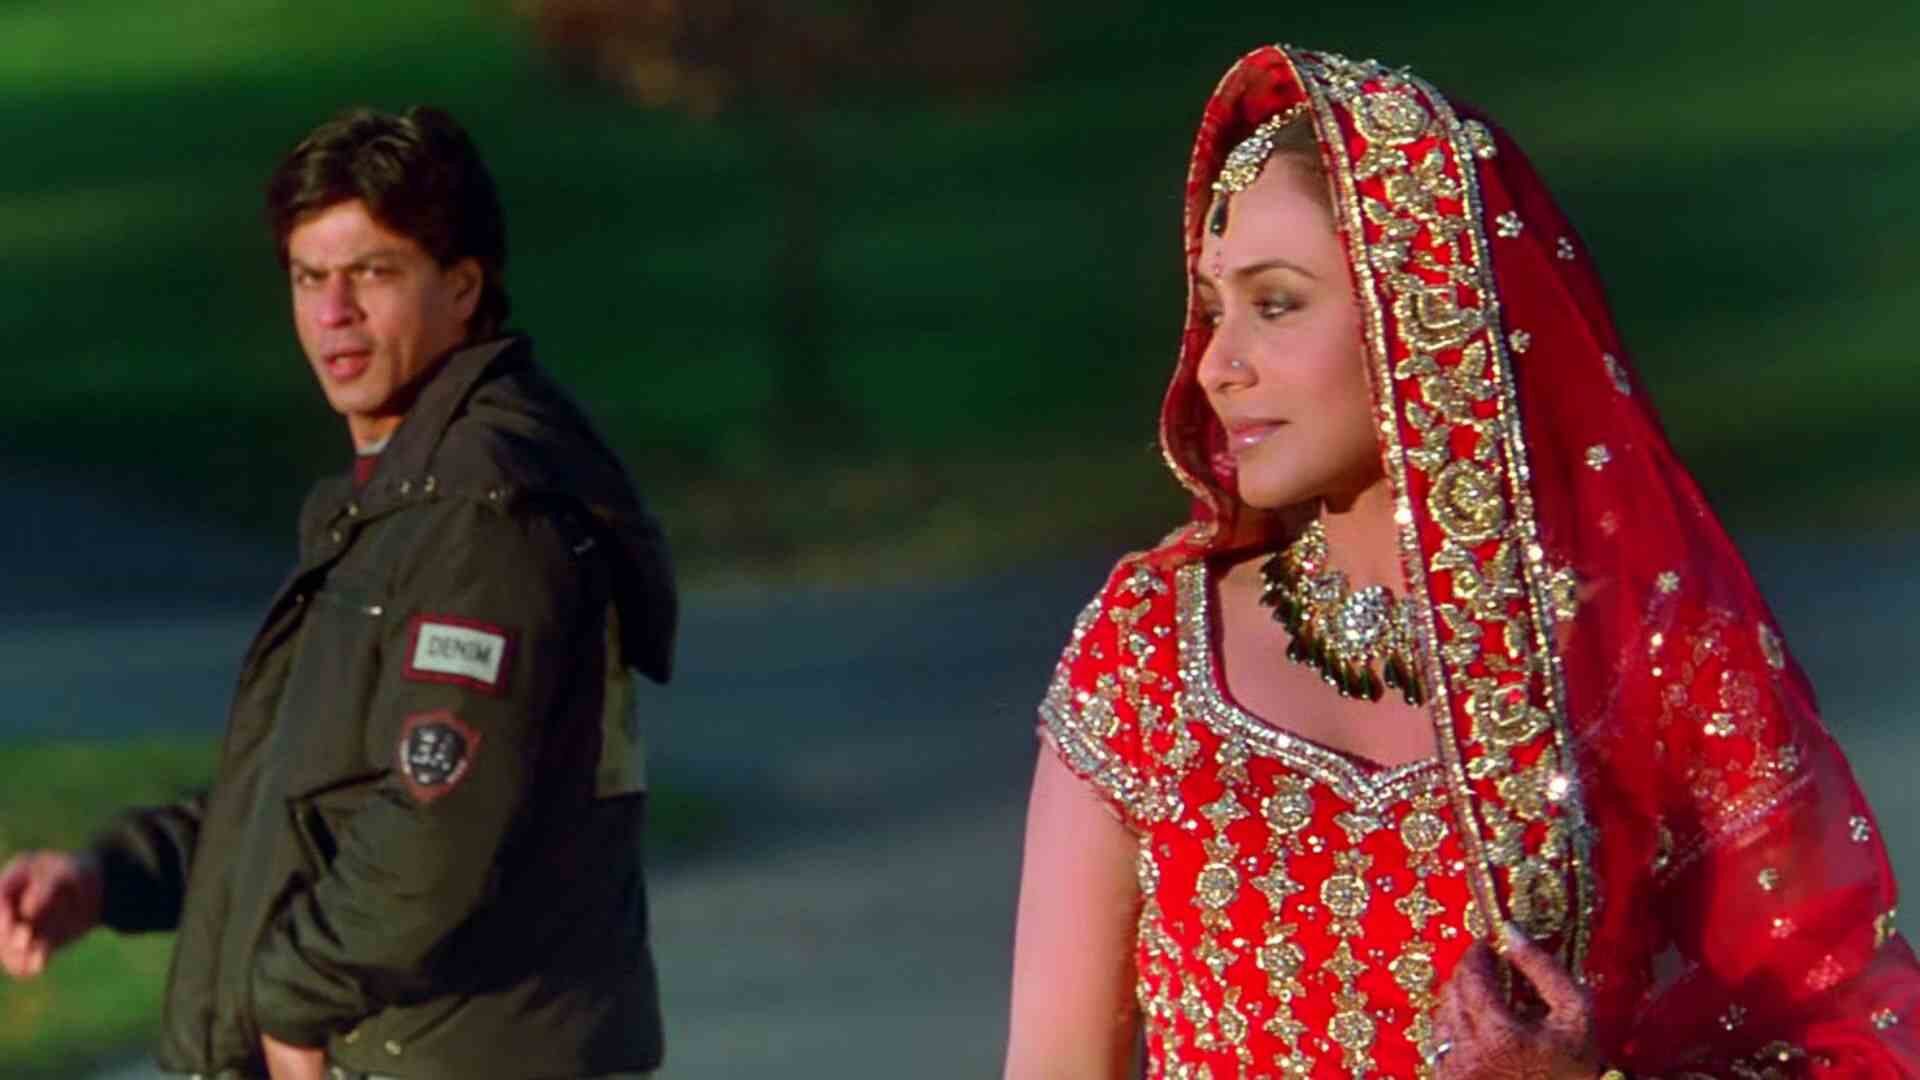 Karan Johar Drops Throwback Pic With Shah Rukh Khan, Rani Mukerji From ‘Kabhi Alvida Naa Kehna’ Set